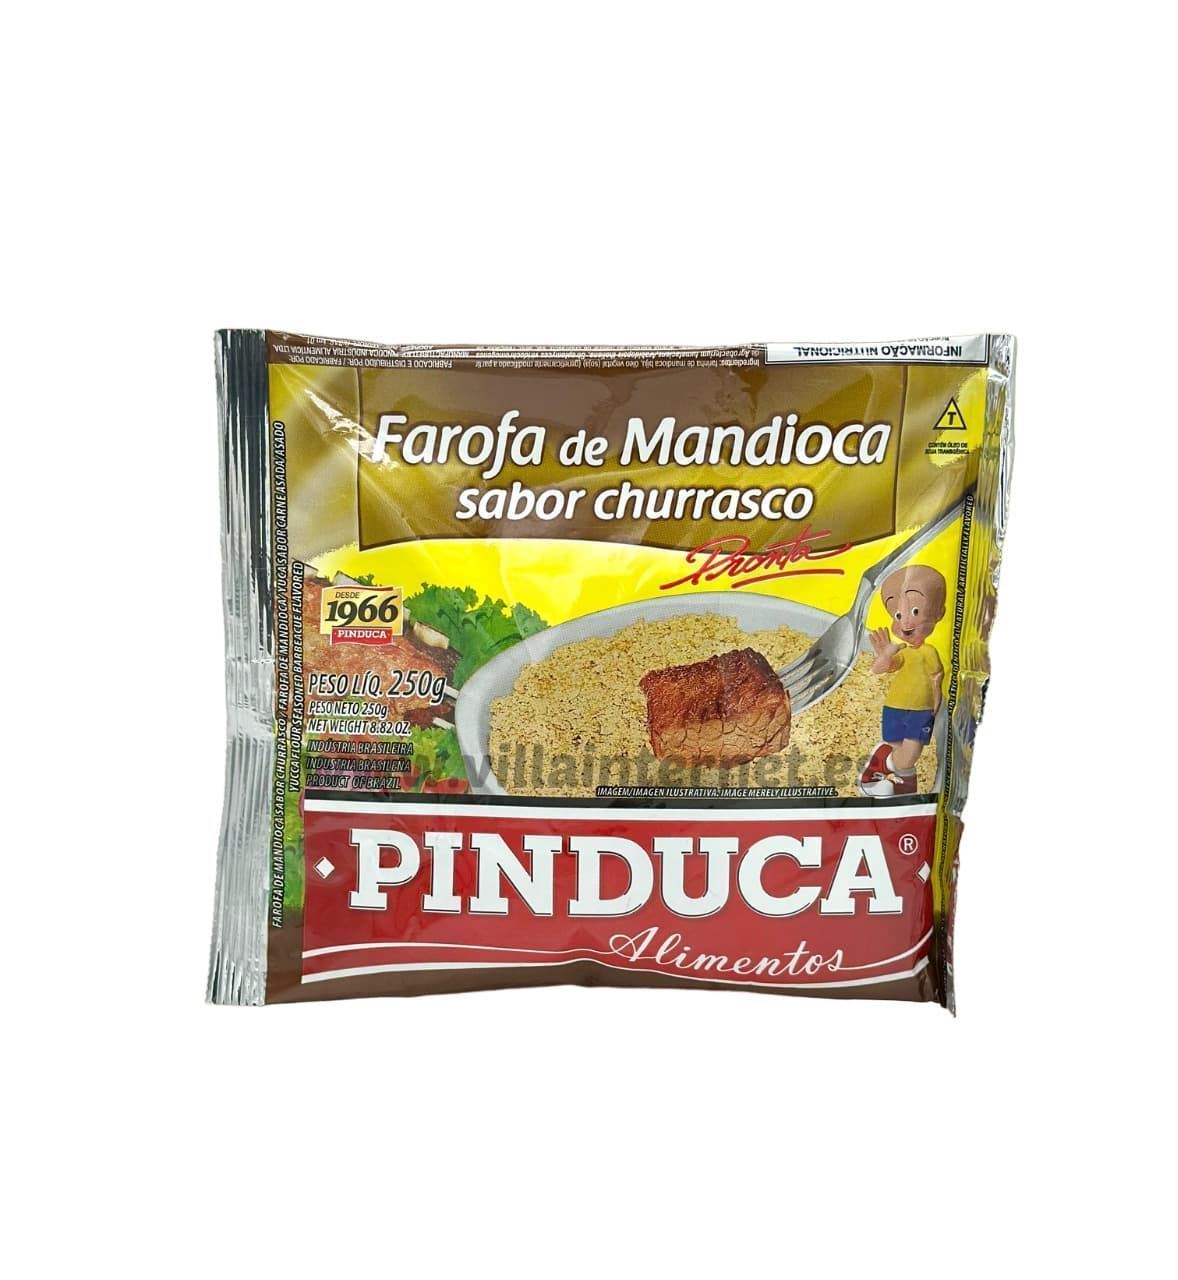 Farofa de mandioca sabor churrasco 250g - Imagen 1